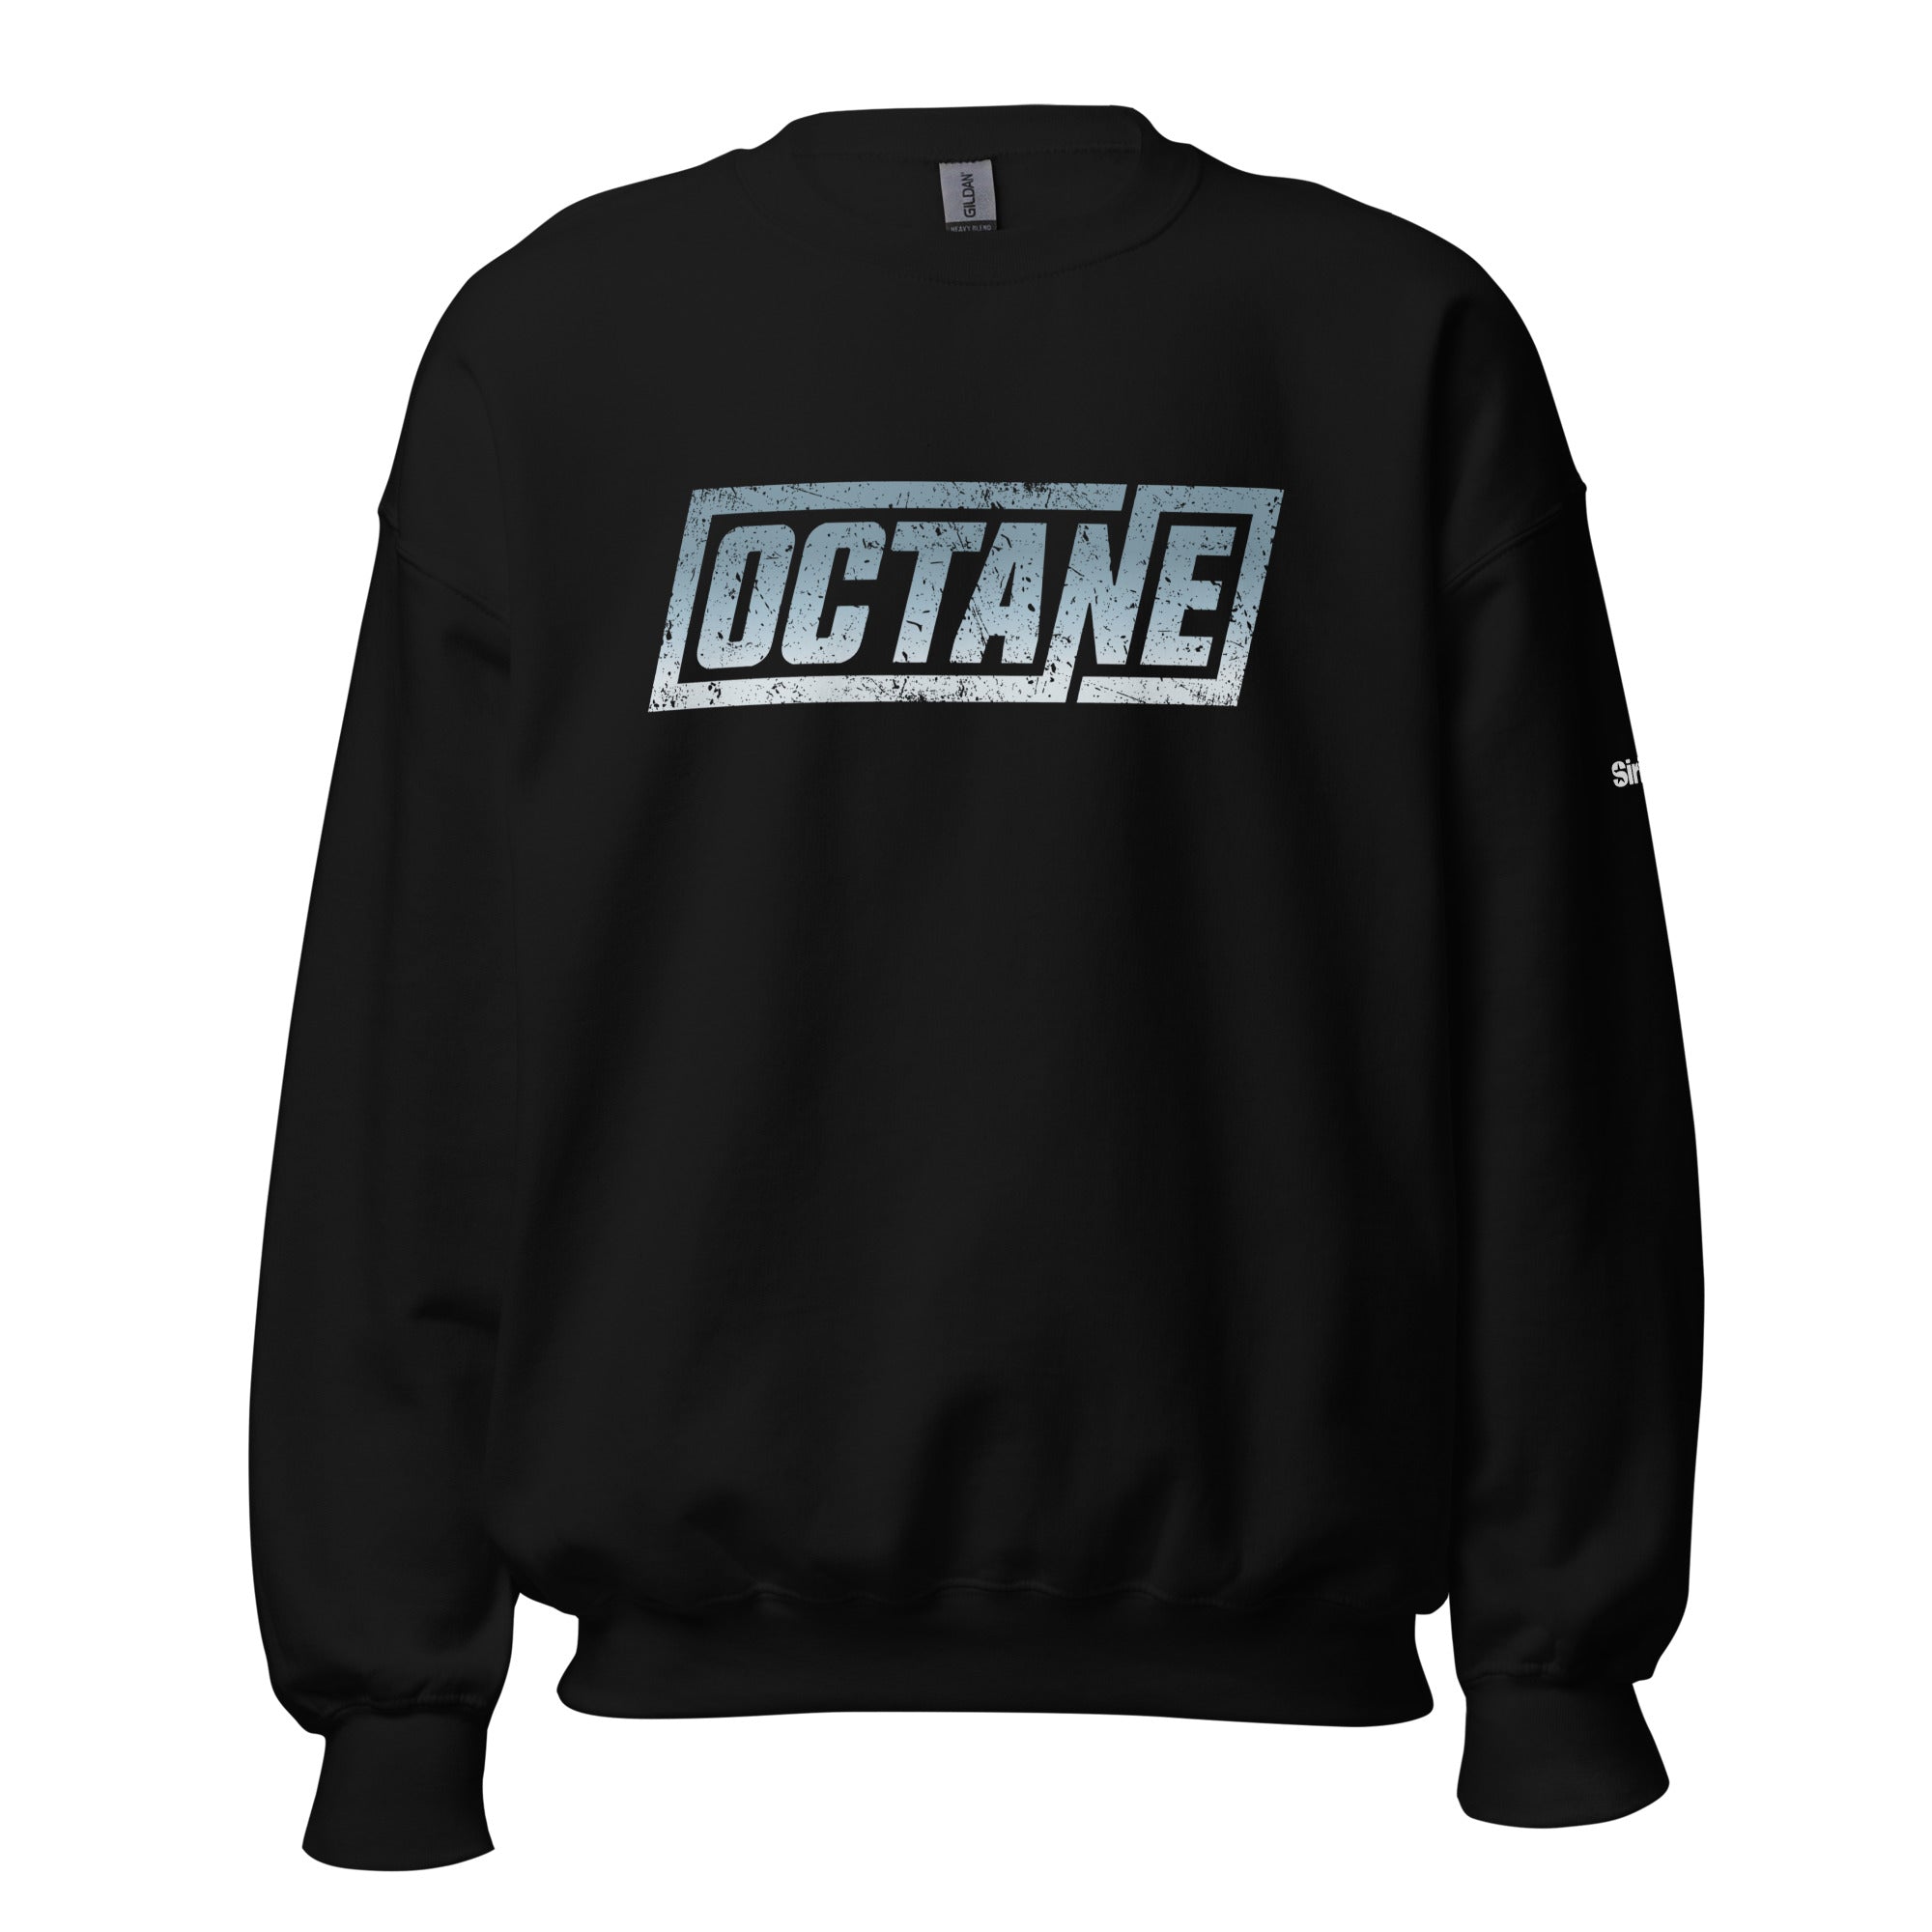 Octane: Sweatshirt (Black)